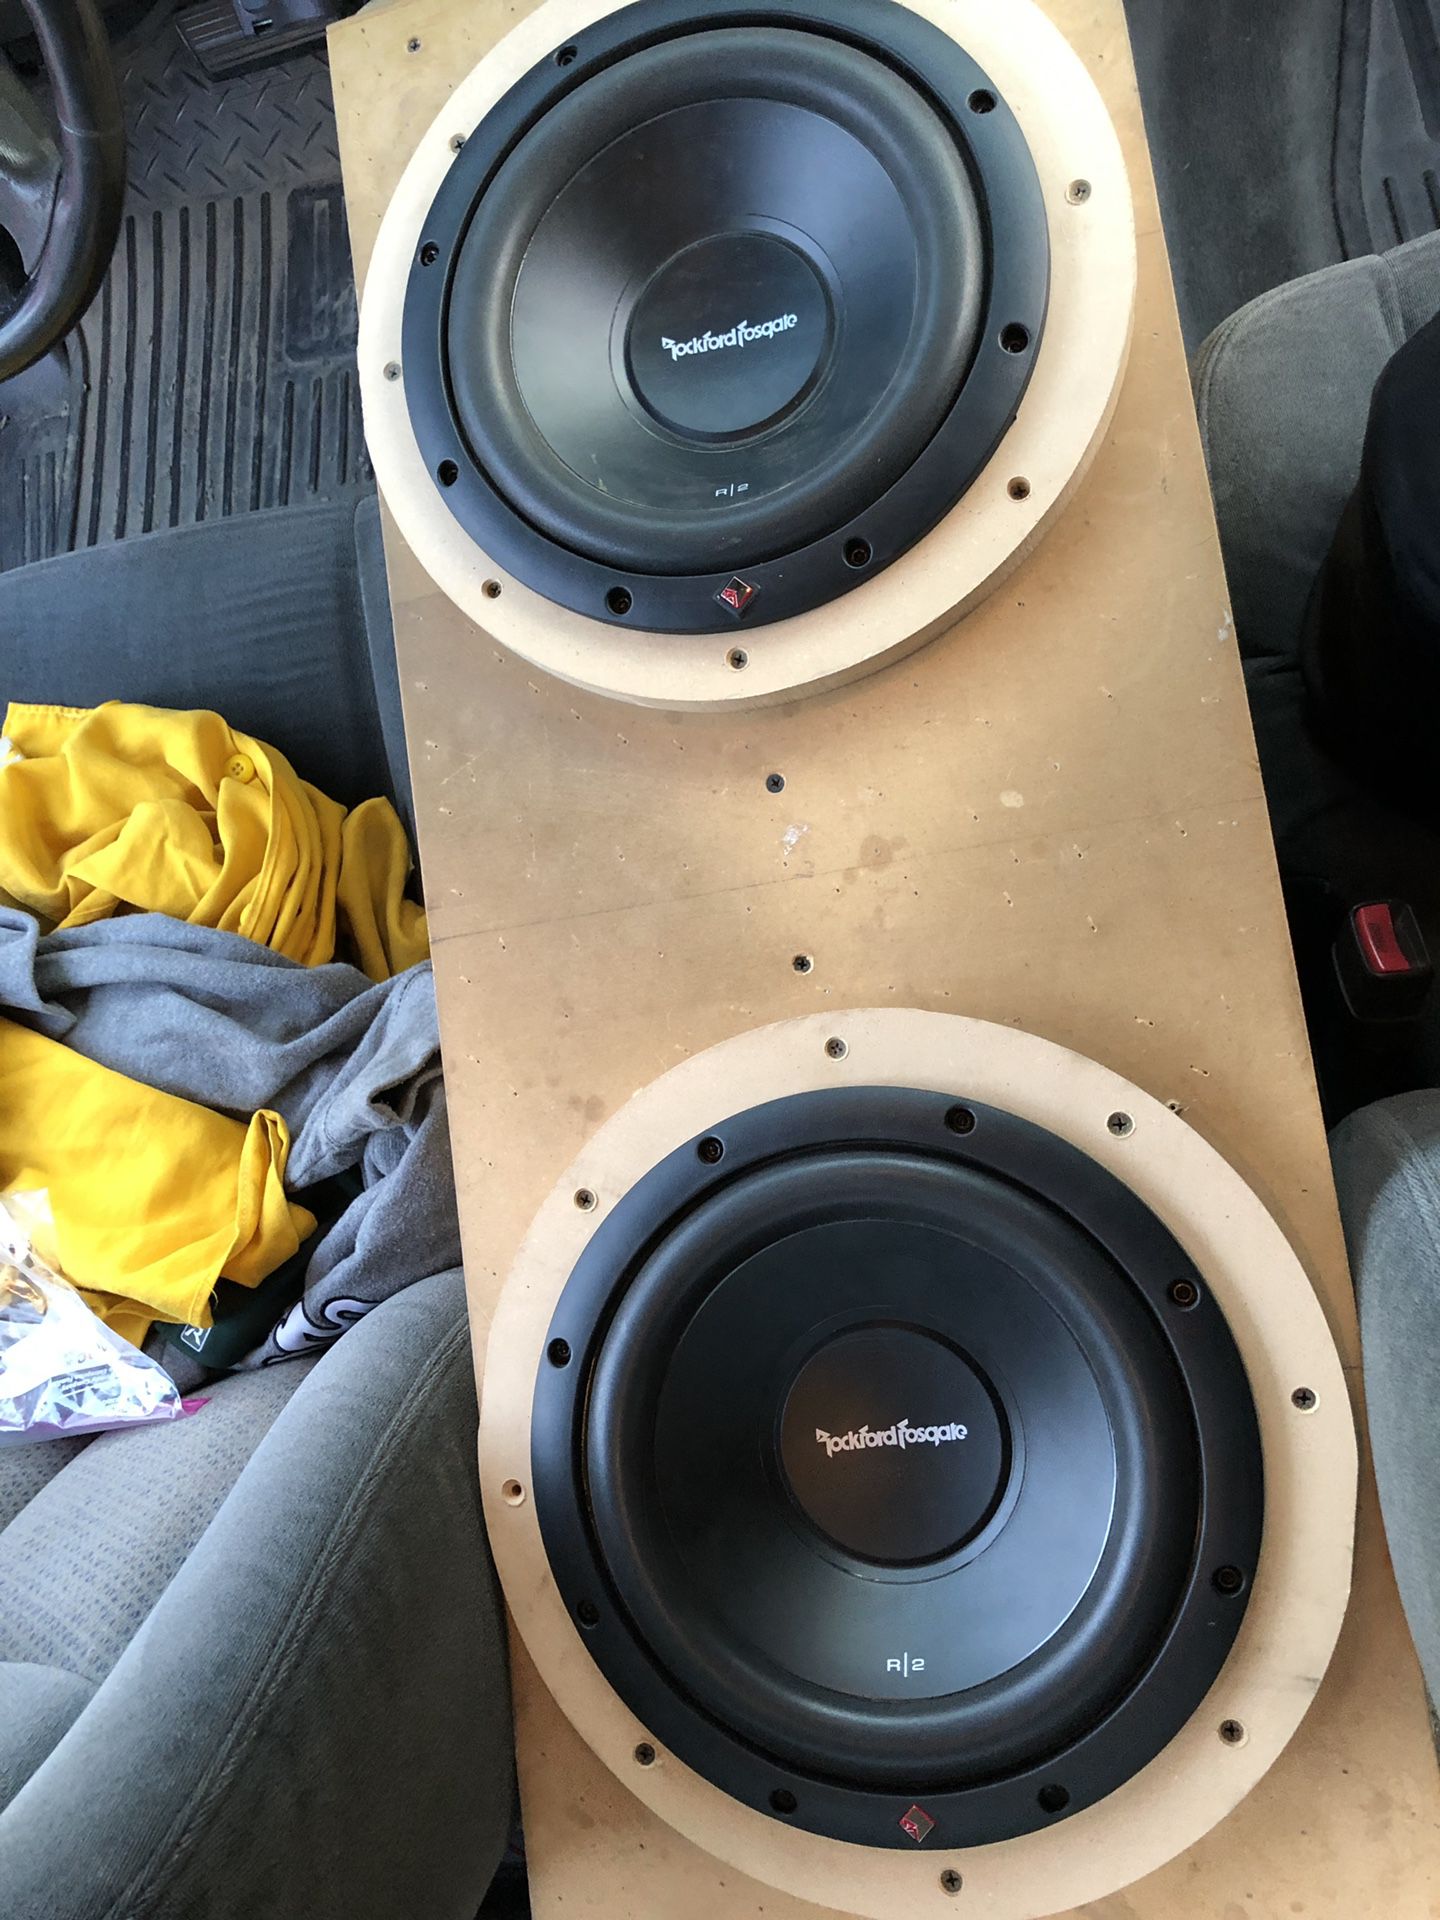 Car stereo